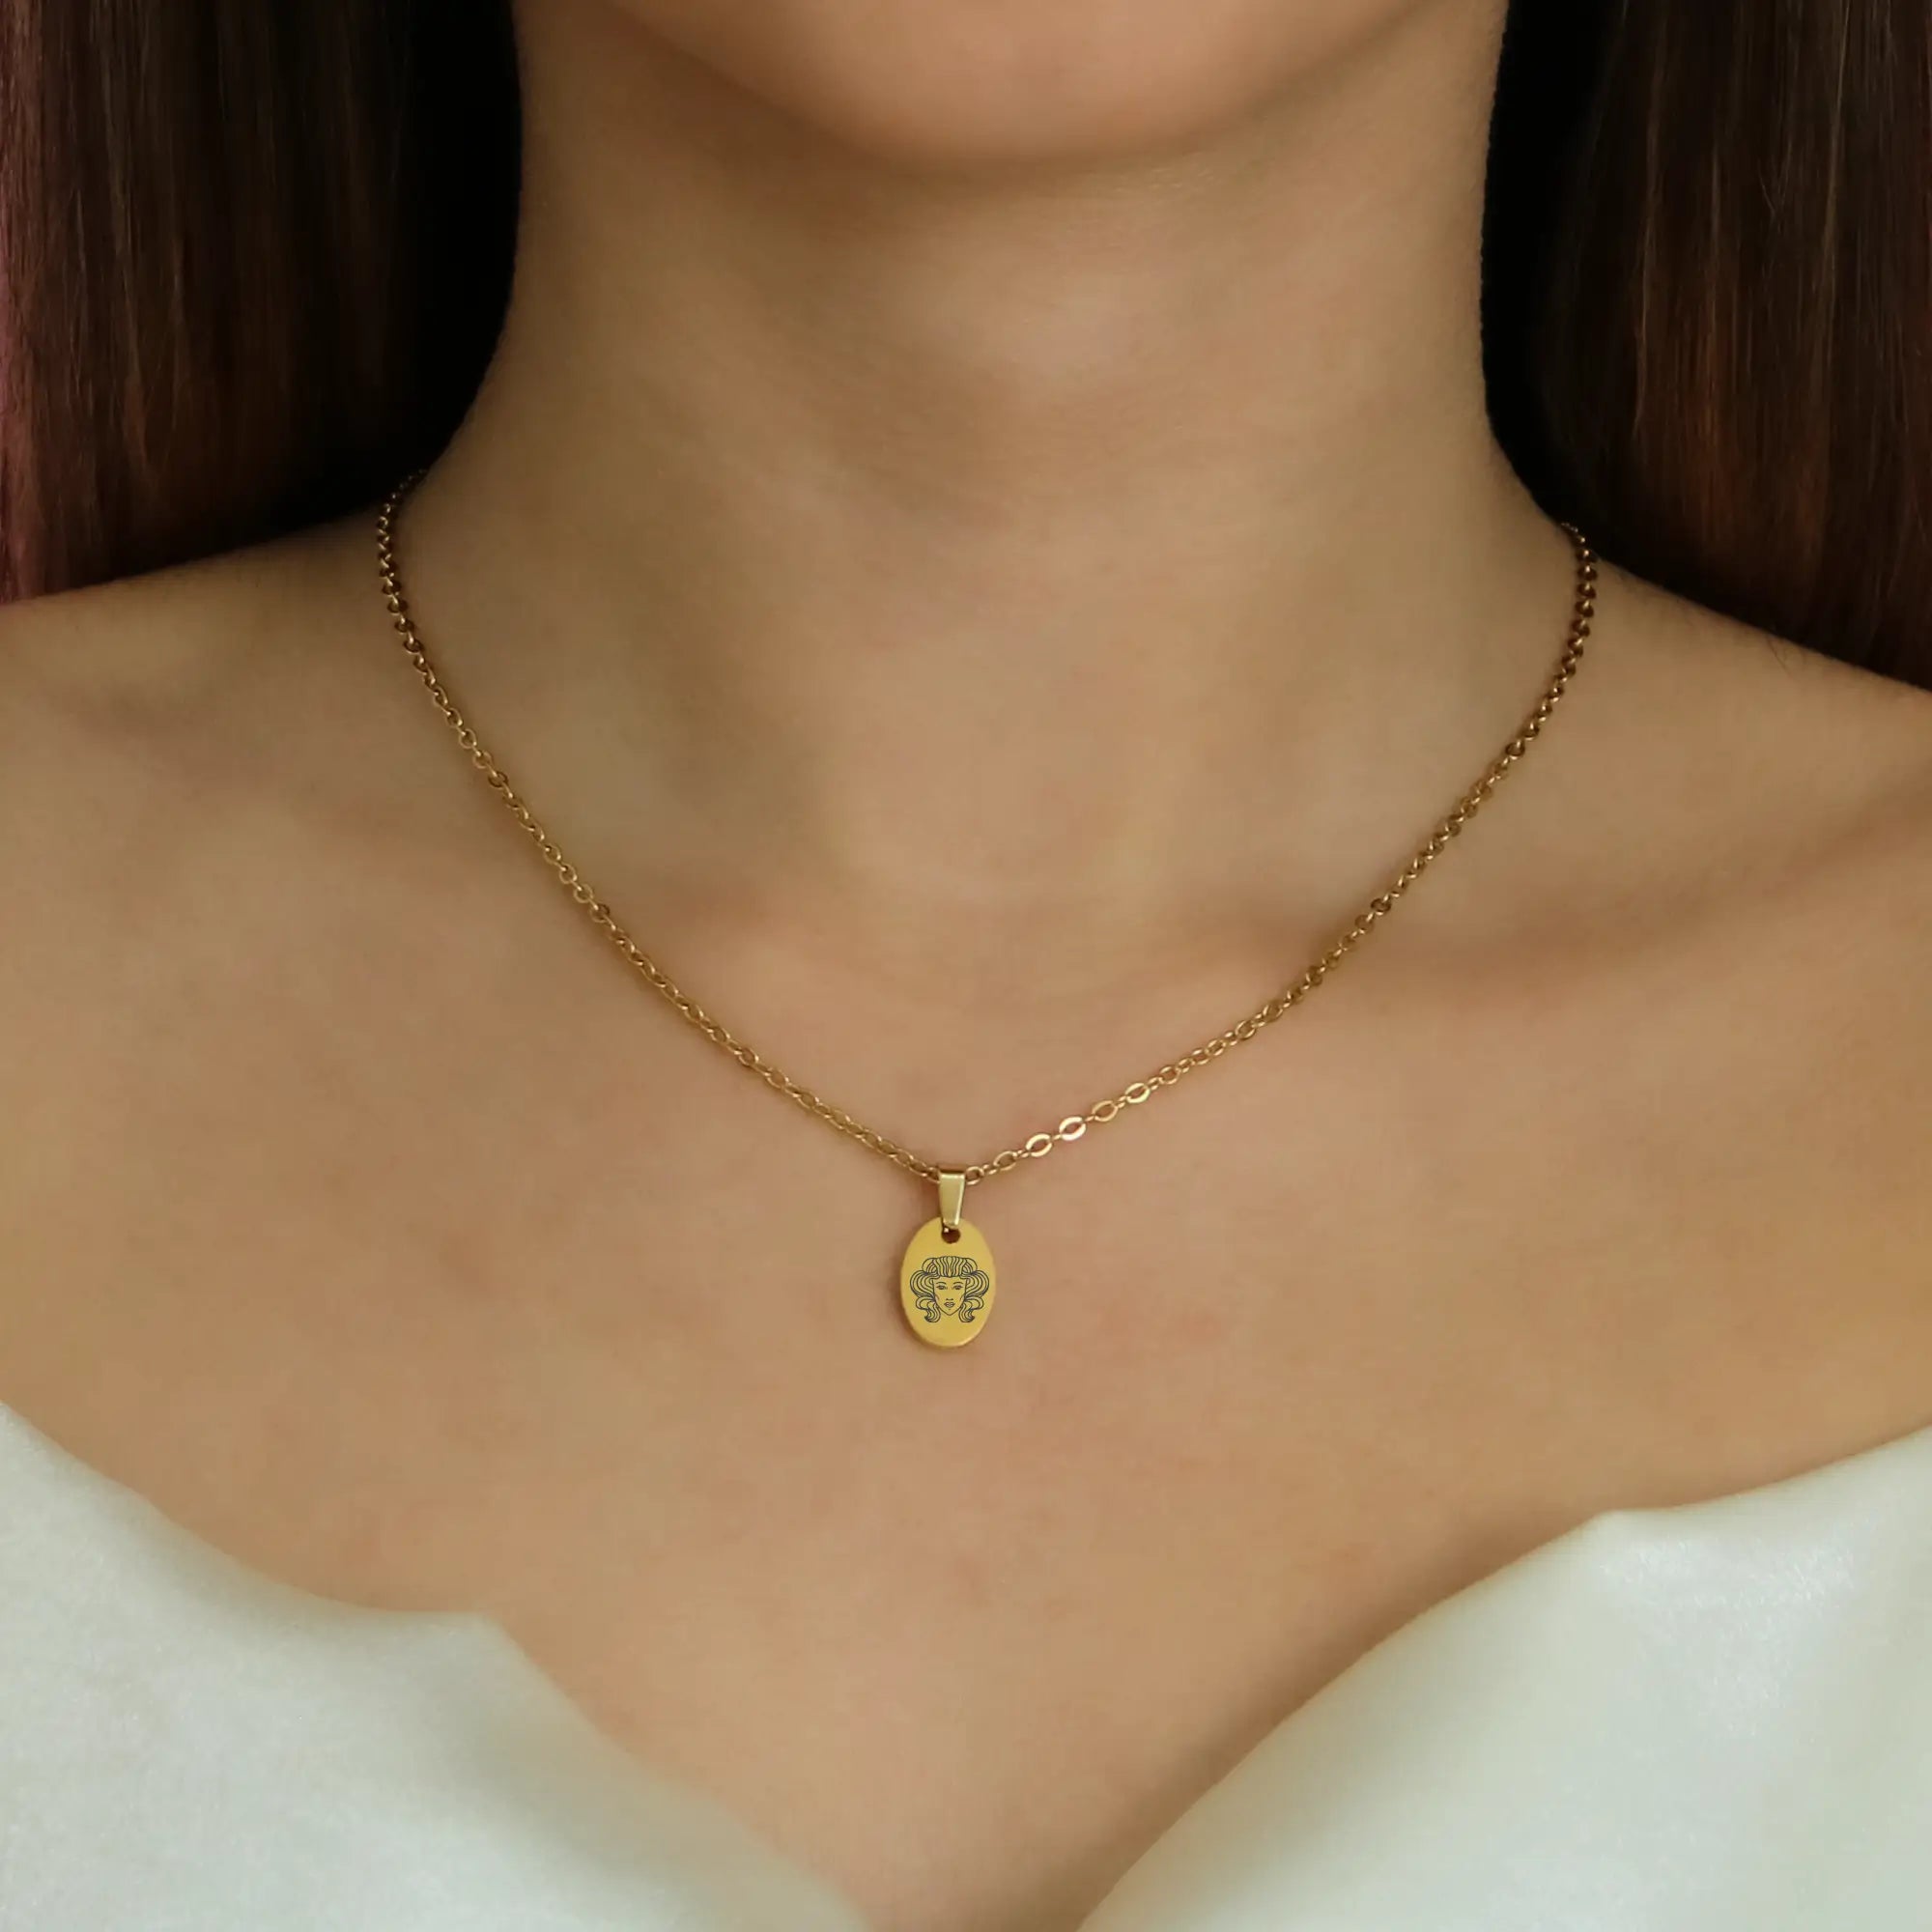 Scorpio Necklace, charm necklace